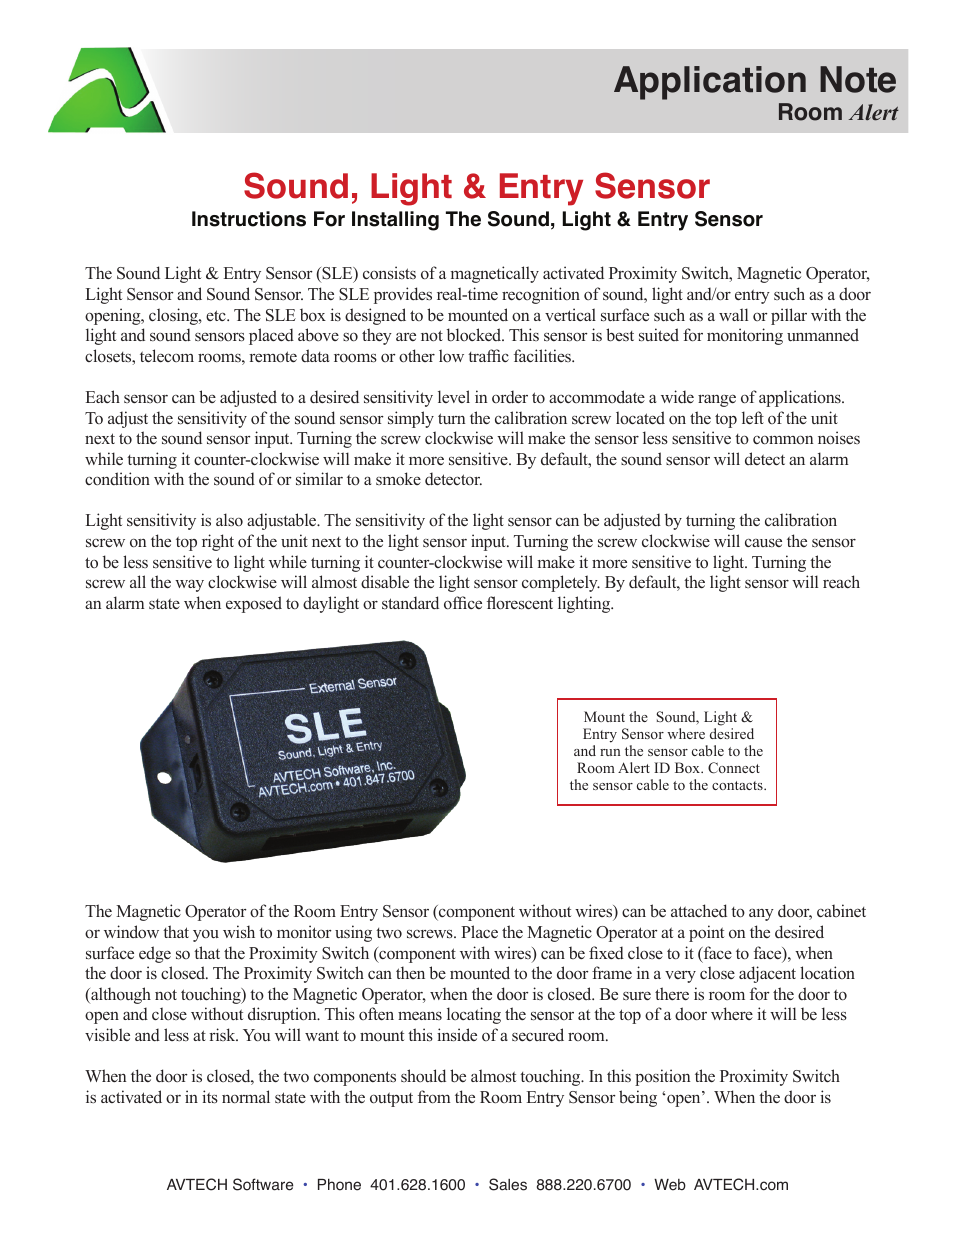 Sound, Light & Entry Sensor (RMA-SLE-SEN)